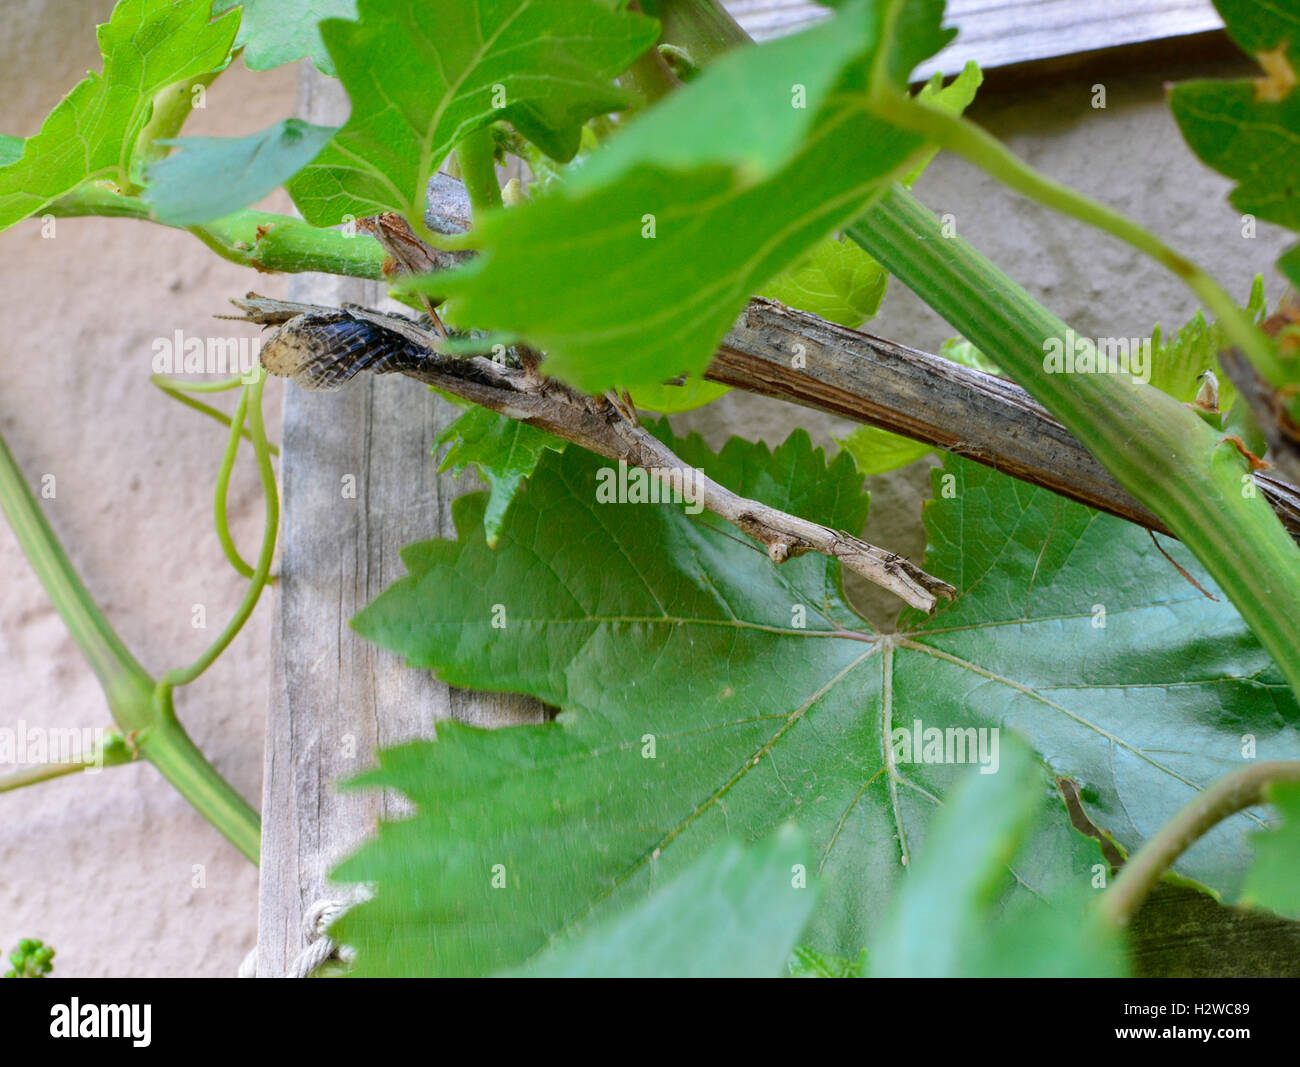 Master of disguise. Stick Insect. Stick Praying Mantis. Phasmida. Master of camouflage. Stick mantis. Stock Photo